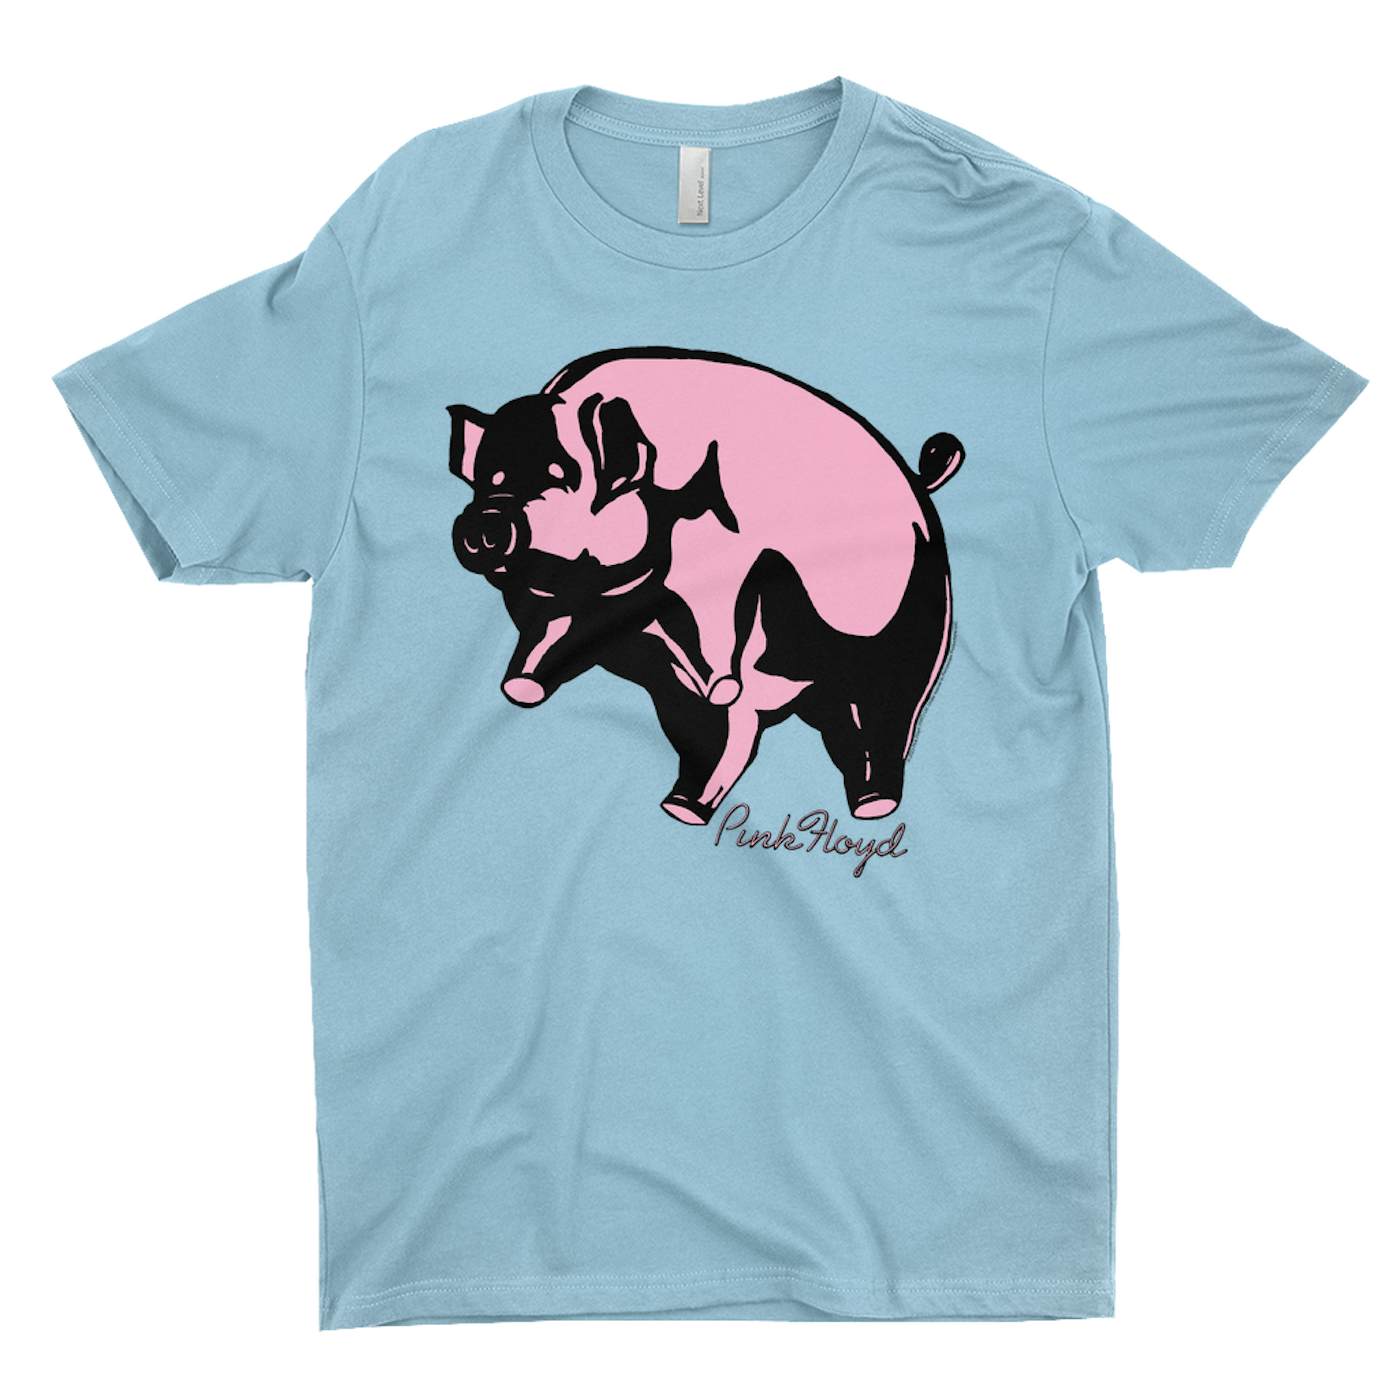 Pink Floyd T-Shirt | Classic Flying Pig Album Art Pink Floyd Shirt